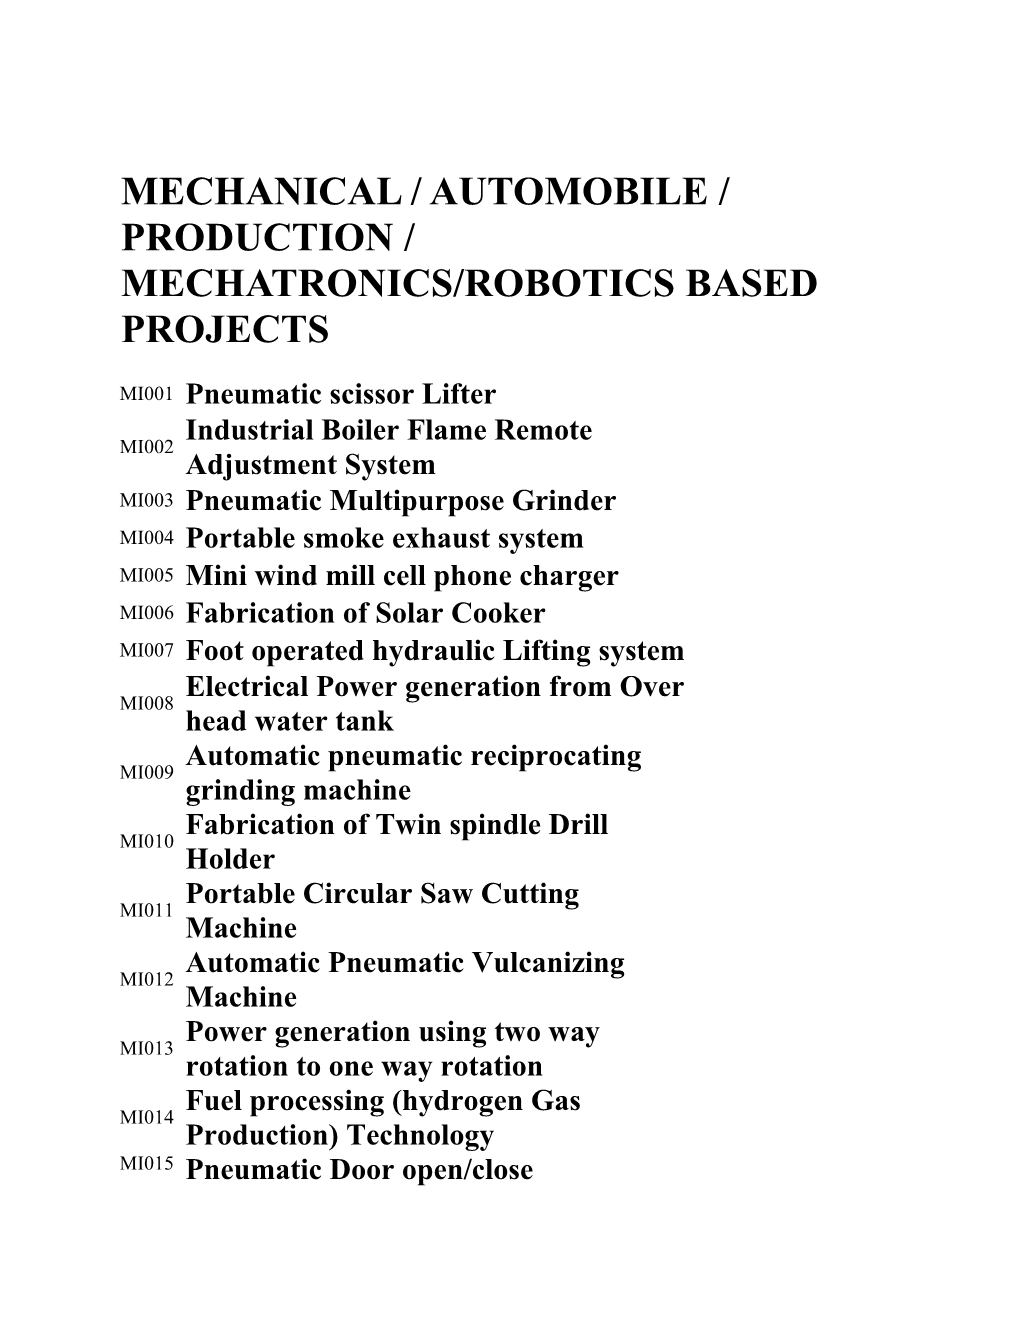 Mechanical / Automobile / Production / Mechatronics/Robotics Based Projects